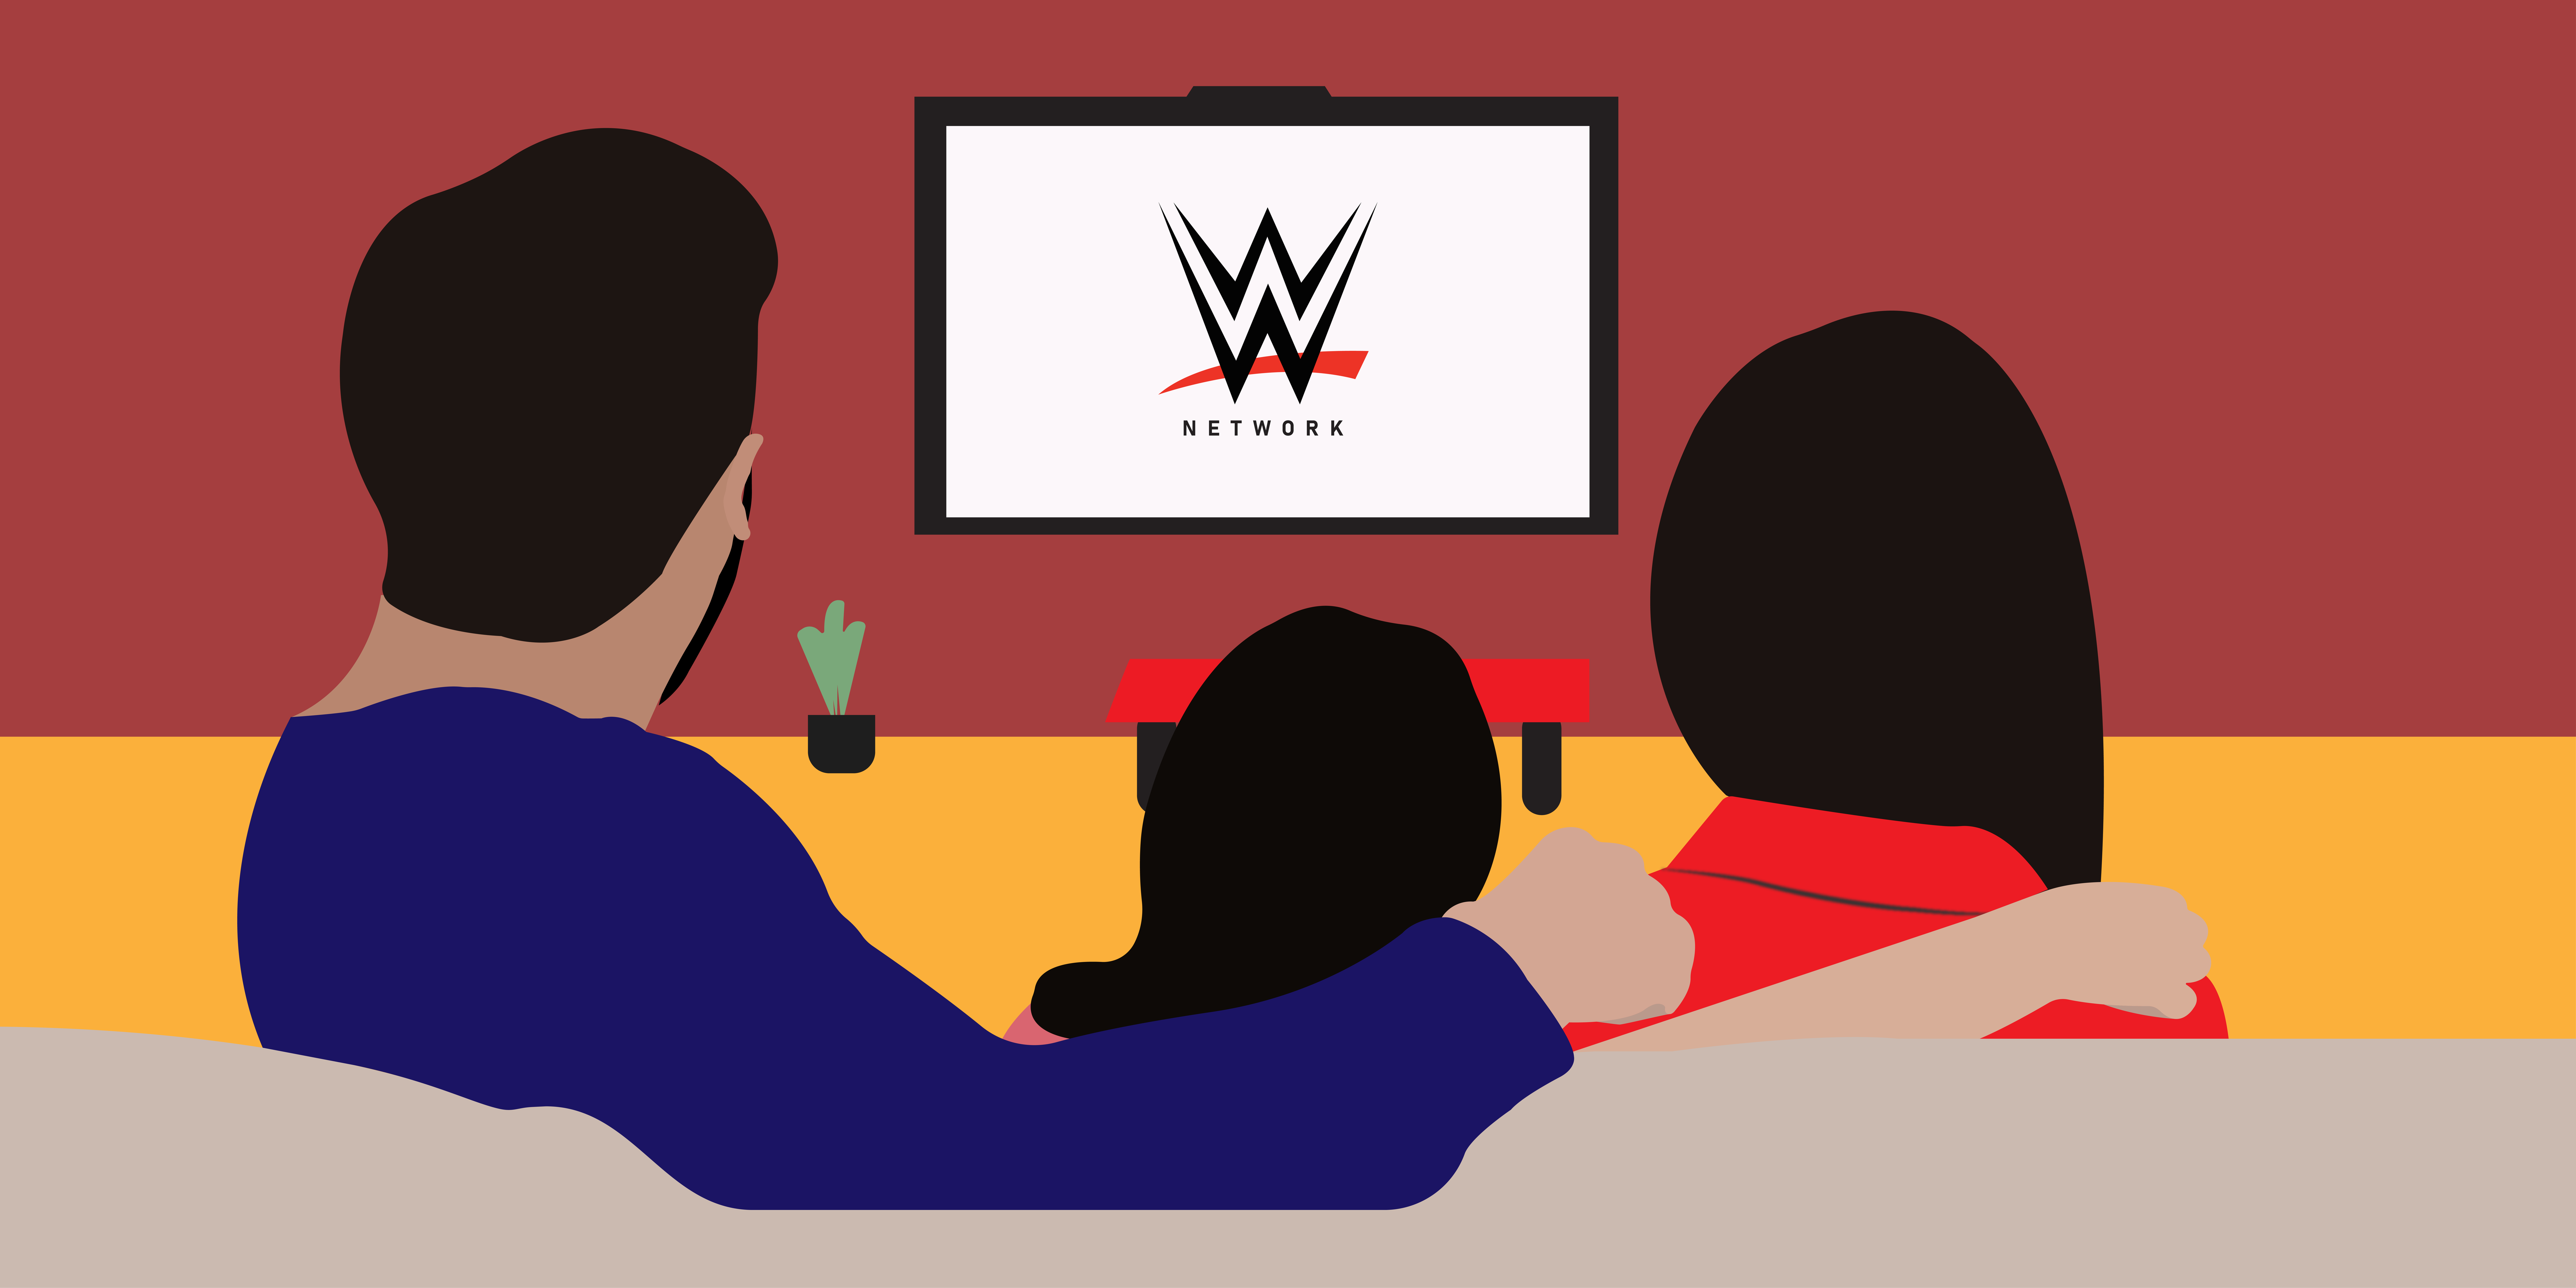 WWE network illustration